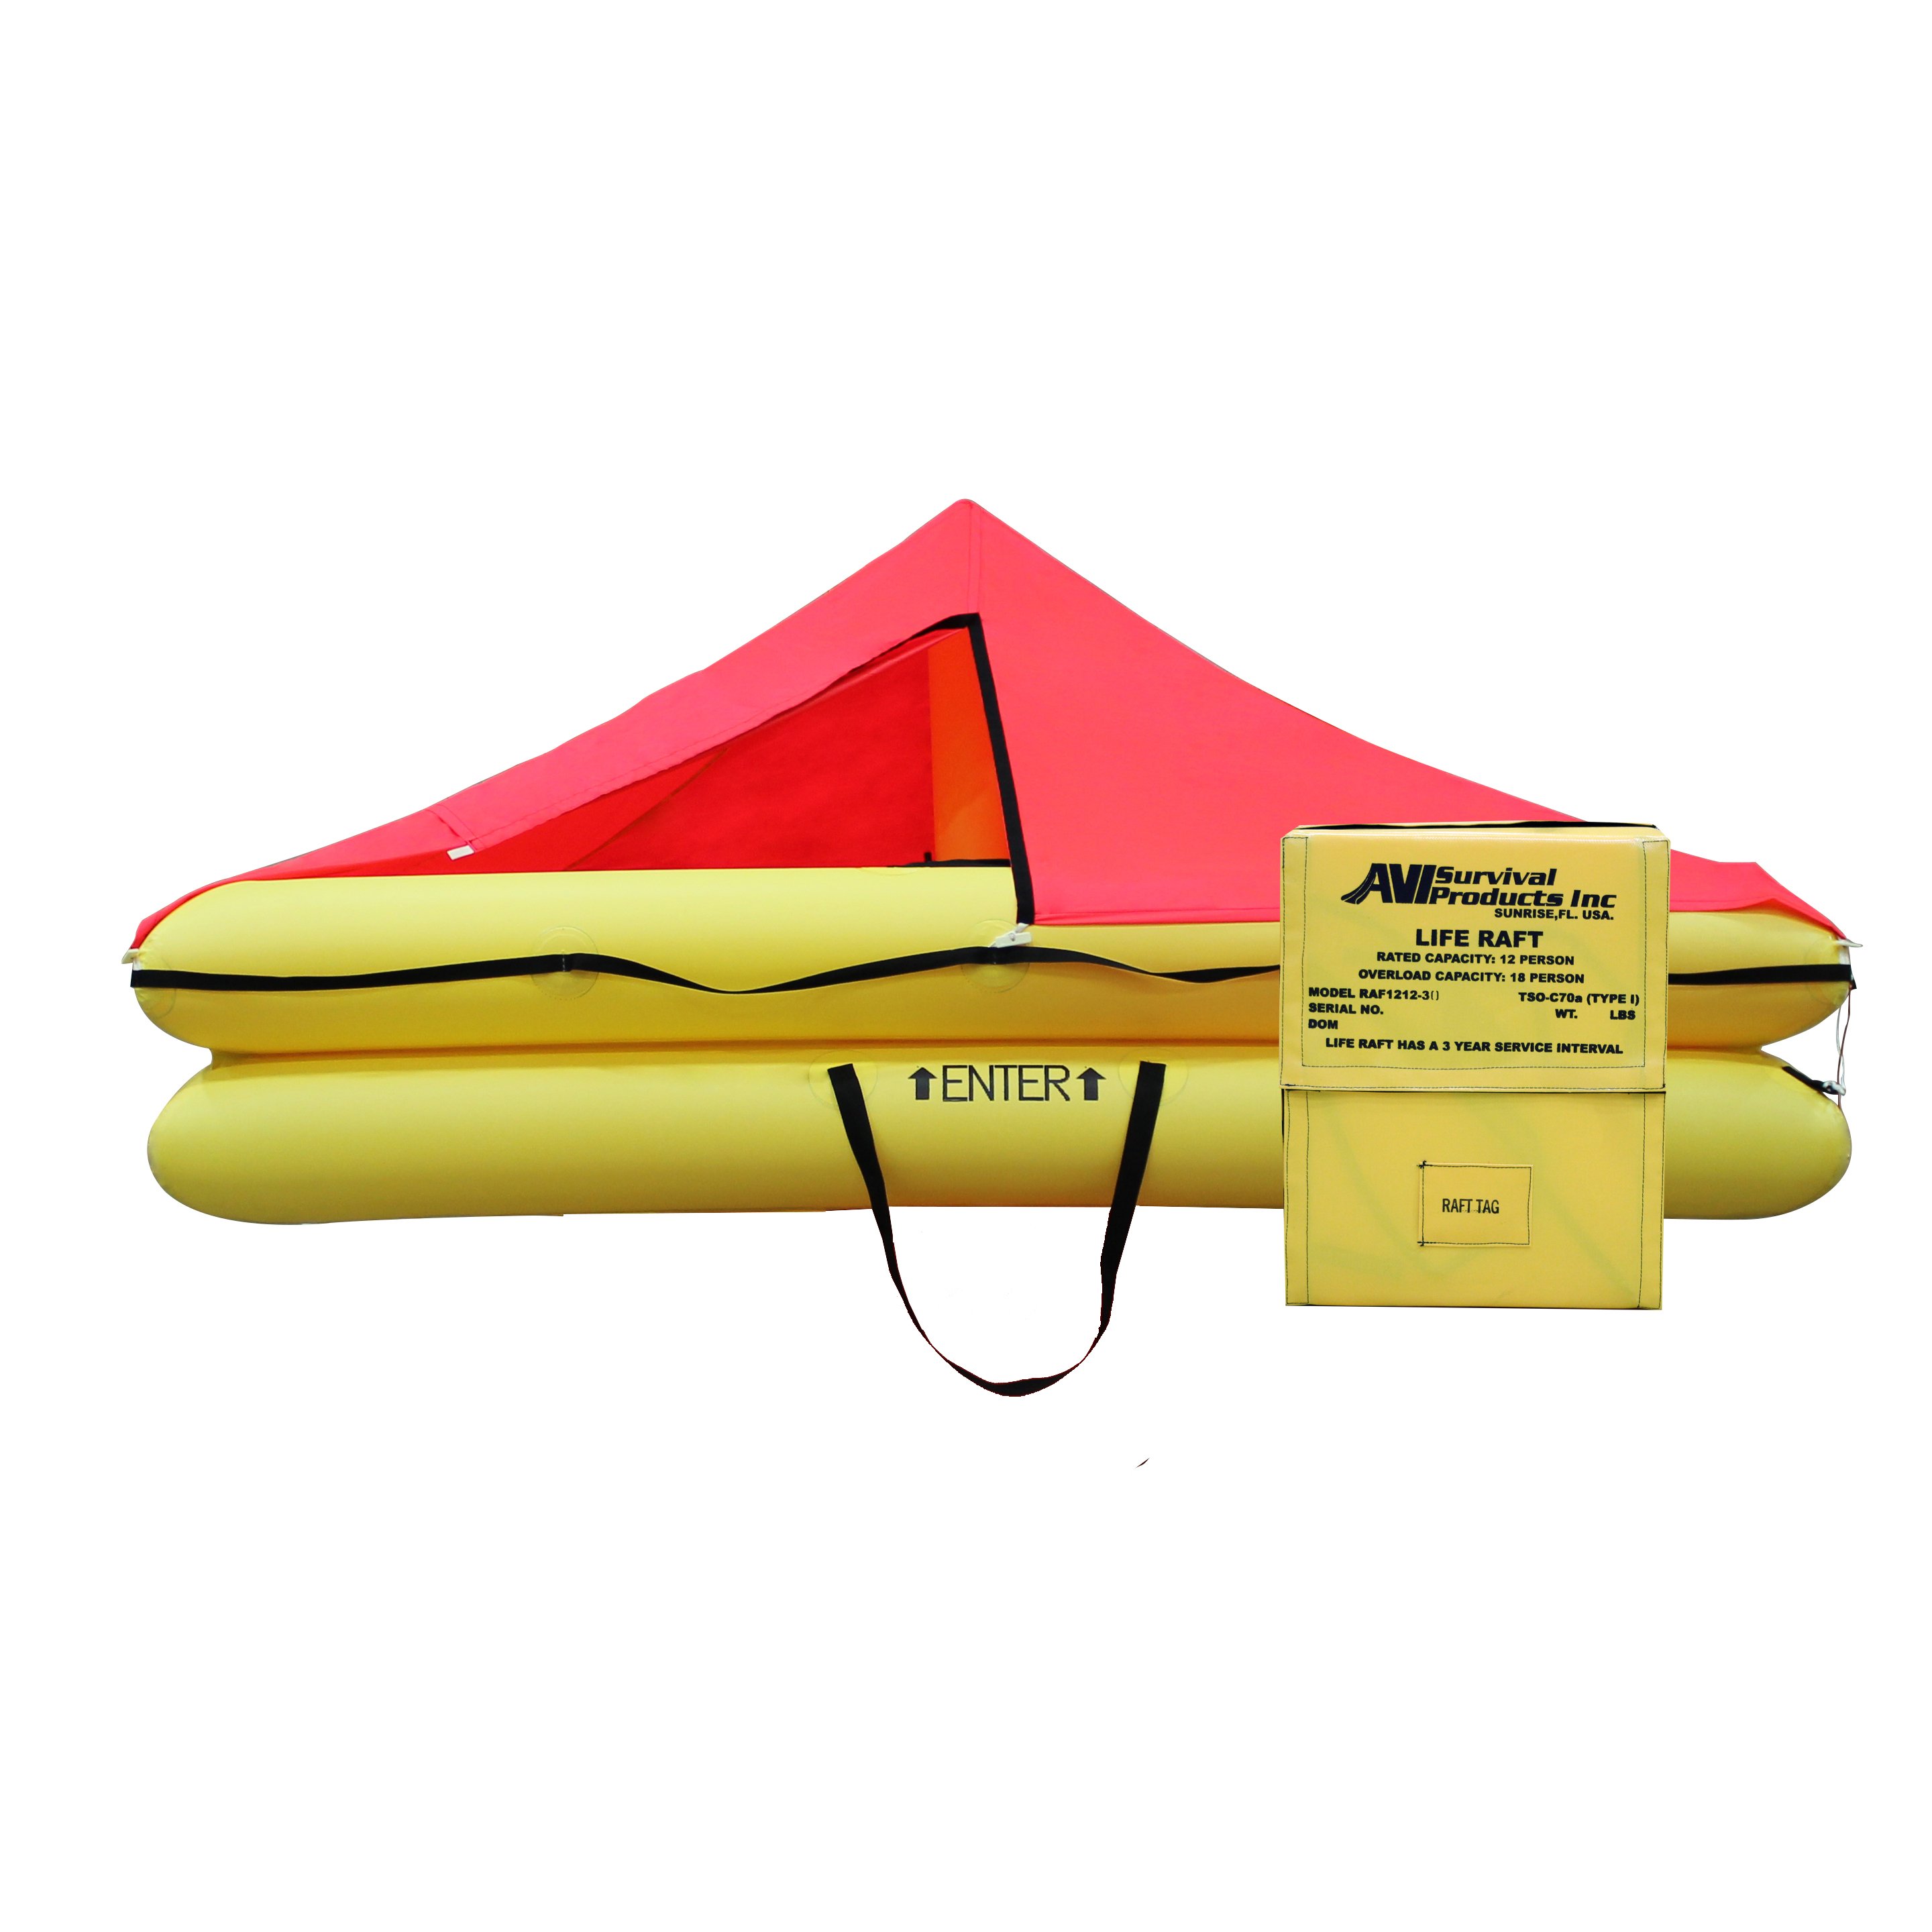 TSO 12 Person Life Raft with FAR 121 Survival Equipment Kit